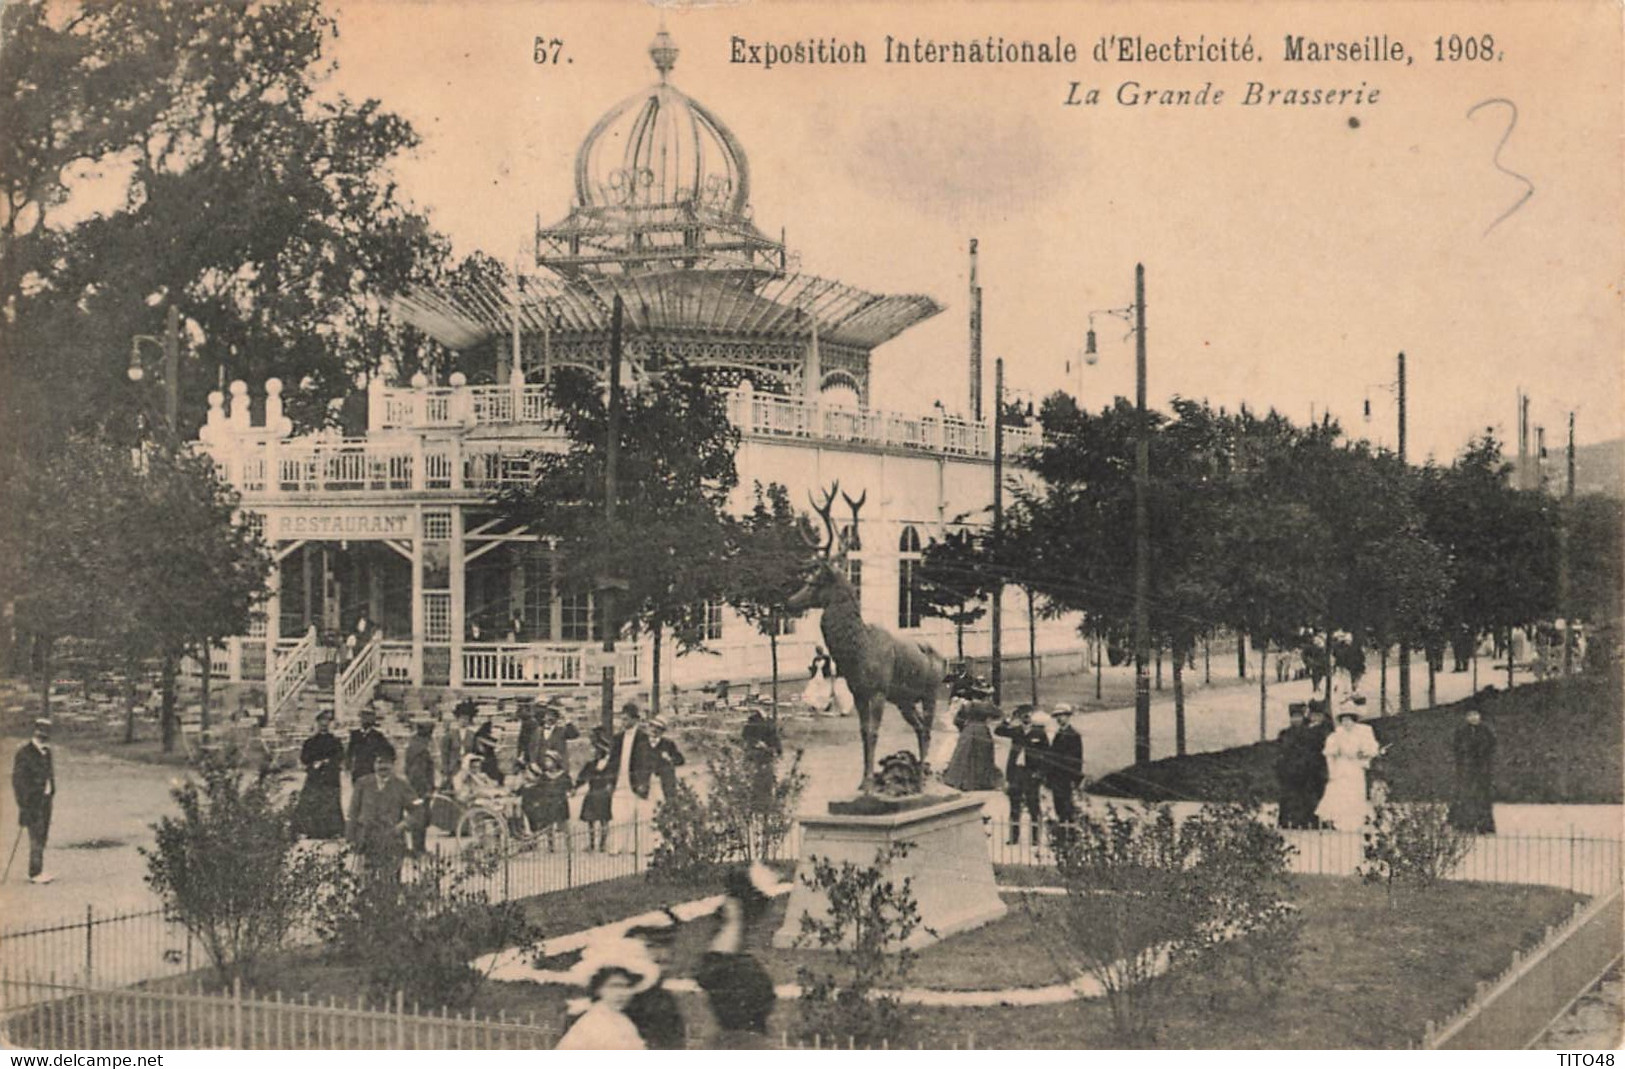 France (13 Marseille) - Exposition Internationale D'Electricité 1908 - La Grande Brasserie - Weltausstellung Elektrizität 1908 U.a.